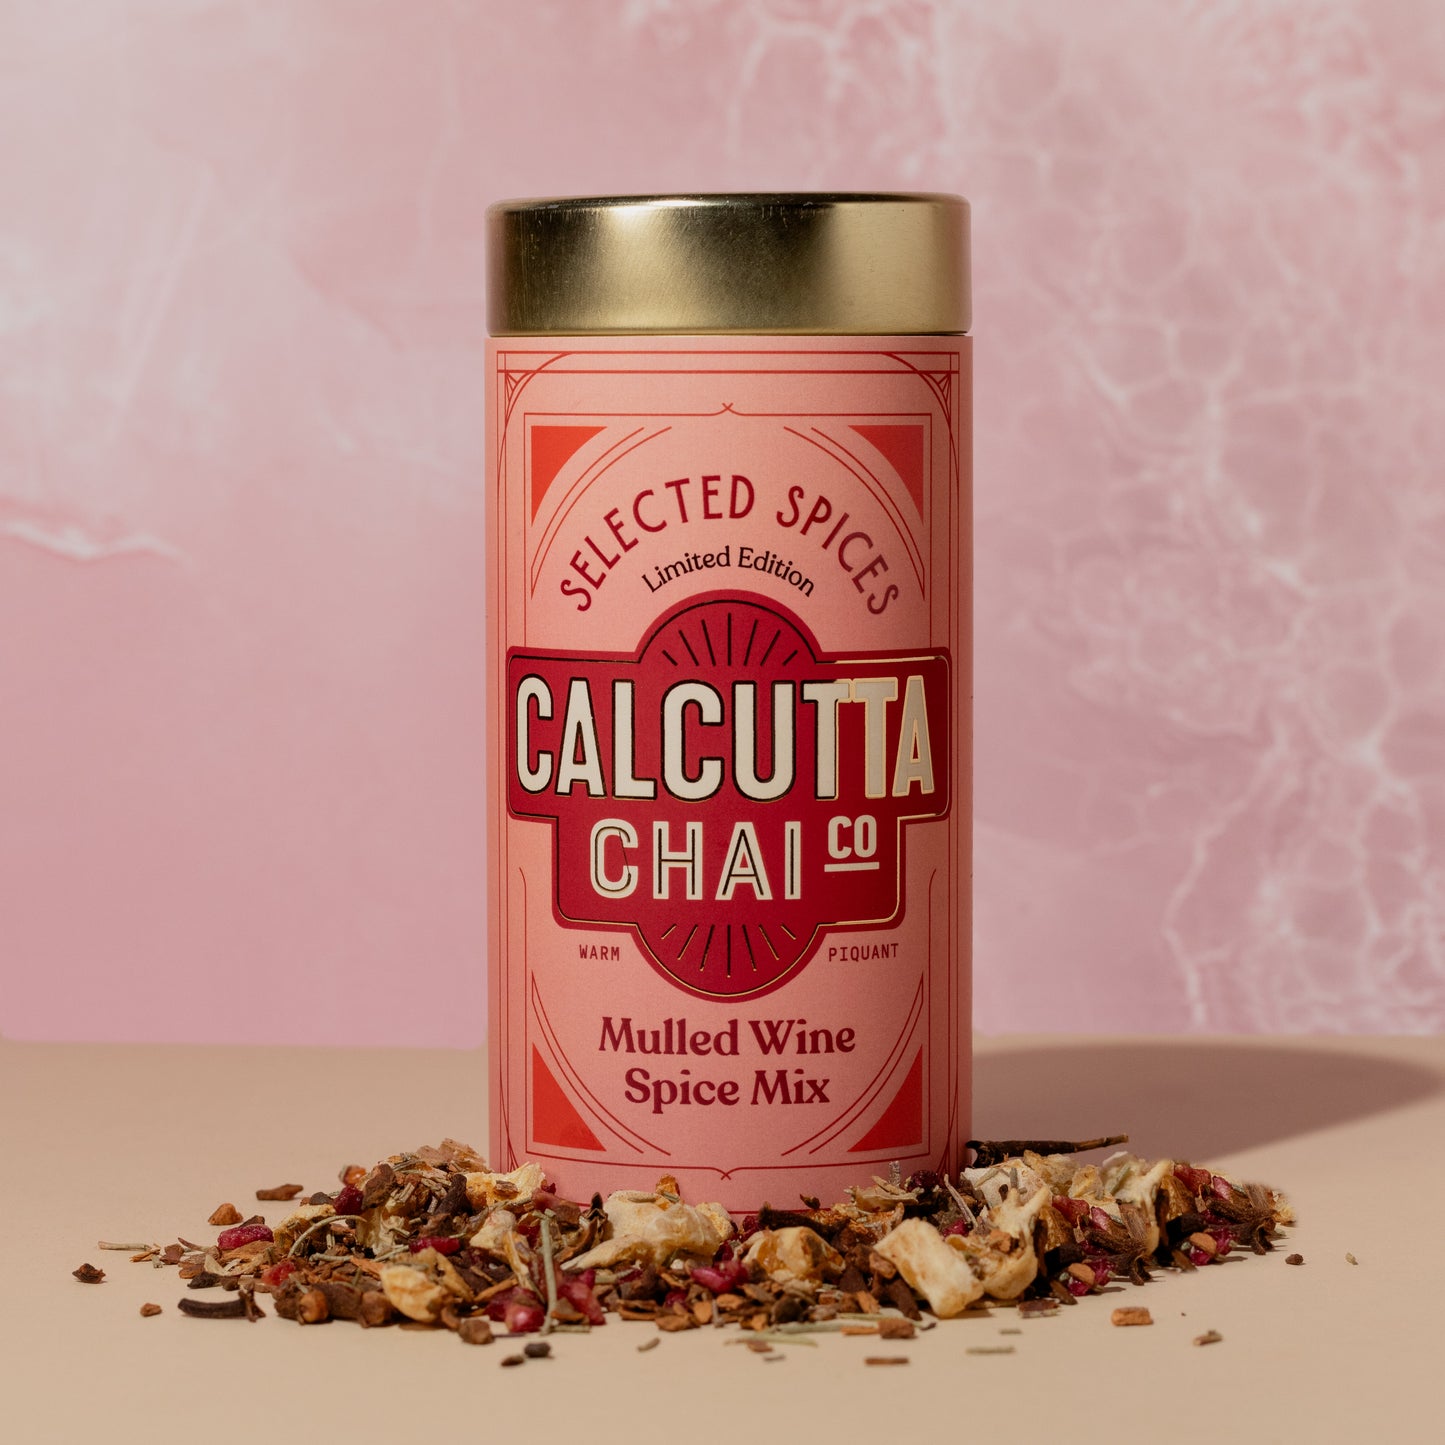 Calcutta Chai Co Mulled Wine Spice Mix